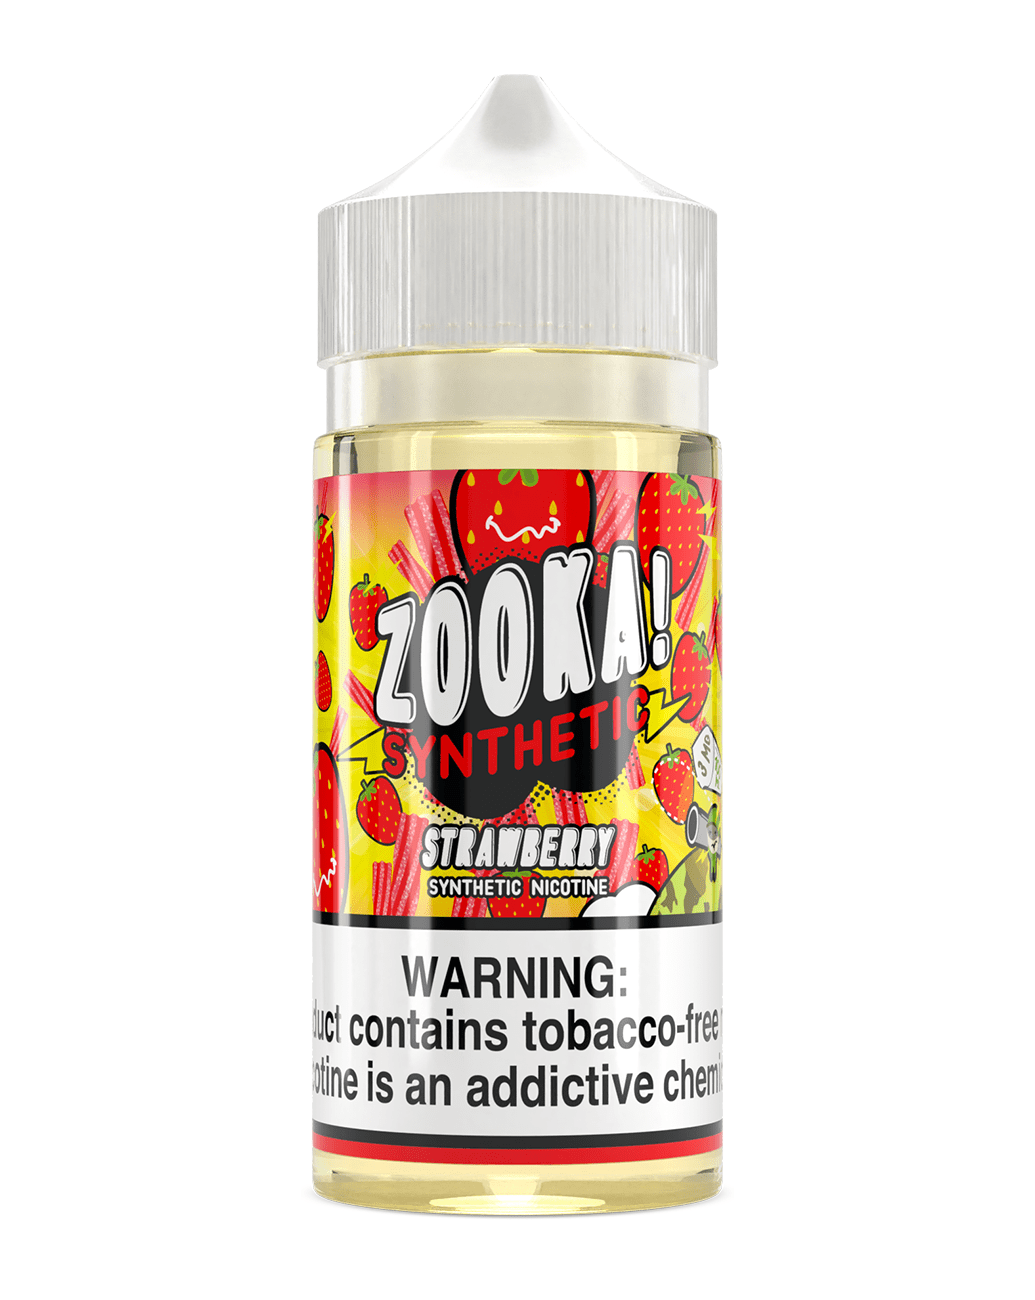 Top Class Zooka Series Strawberry 100ml TF Vape Juice